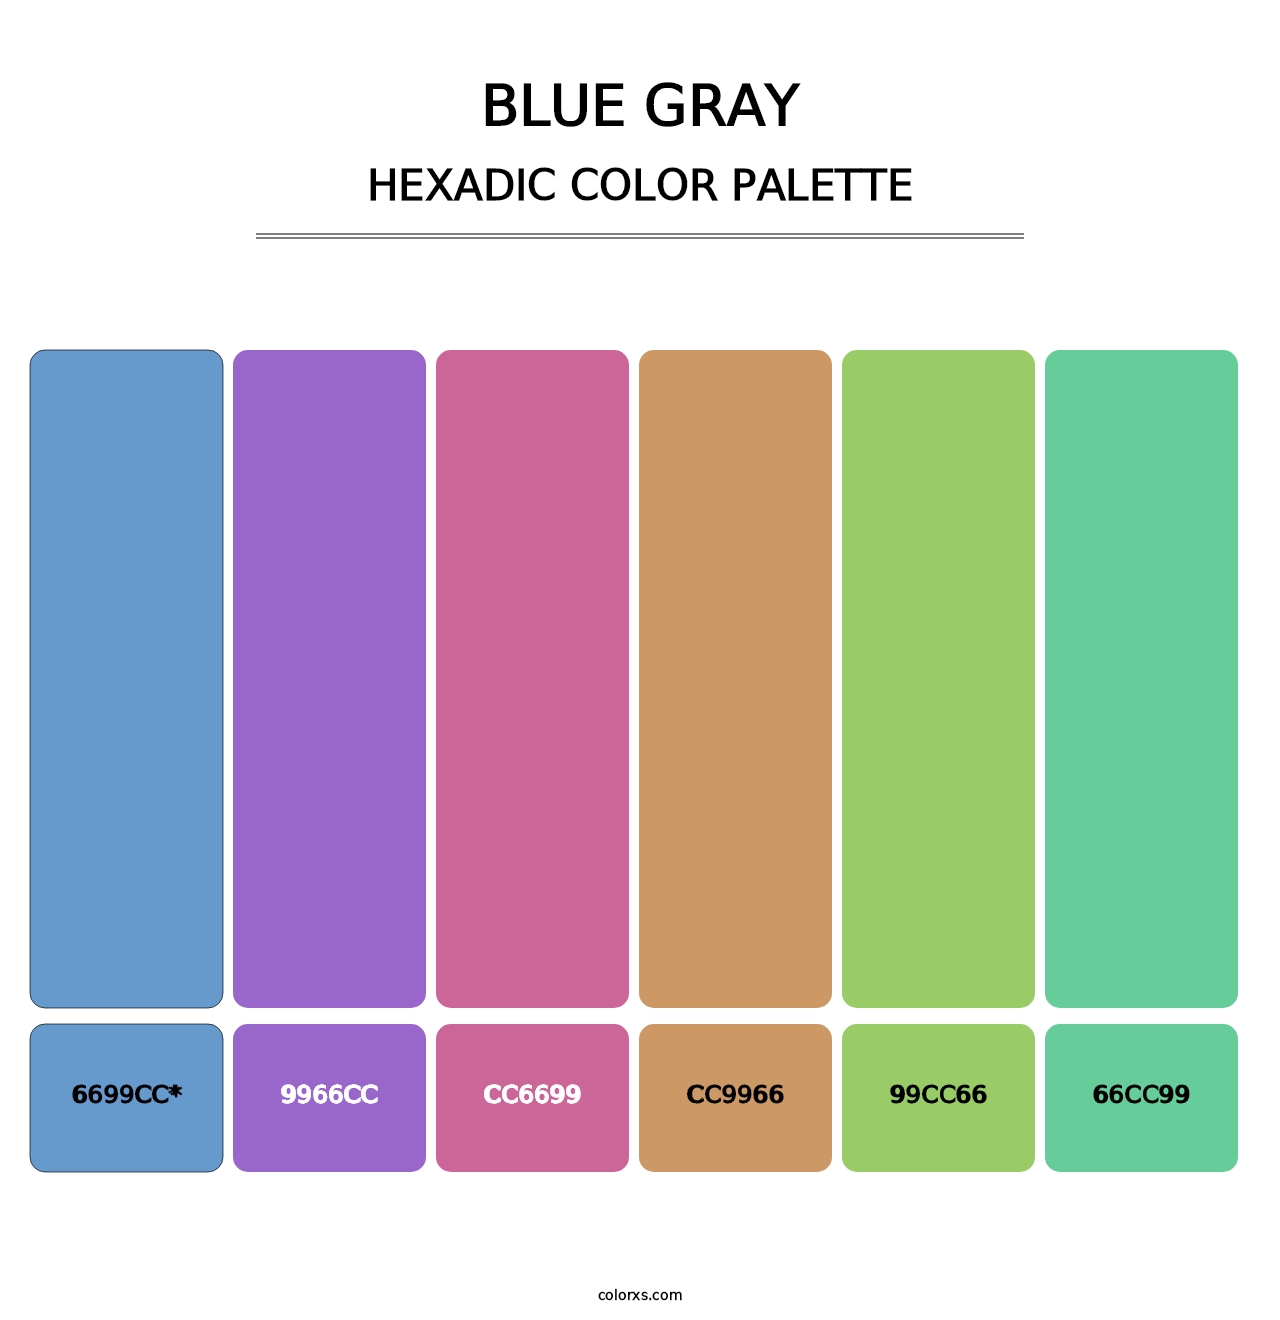 Blue Gray - Hexadic Color Palette